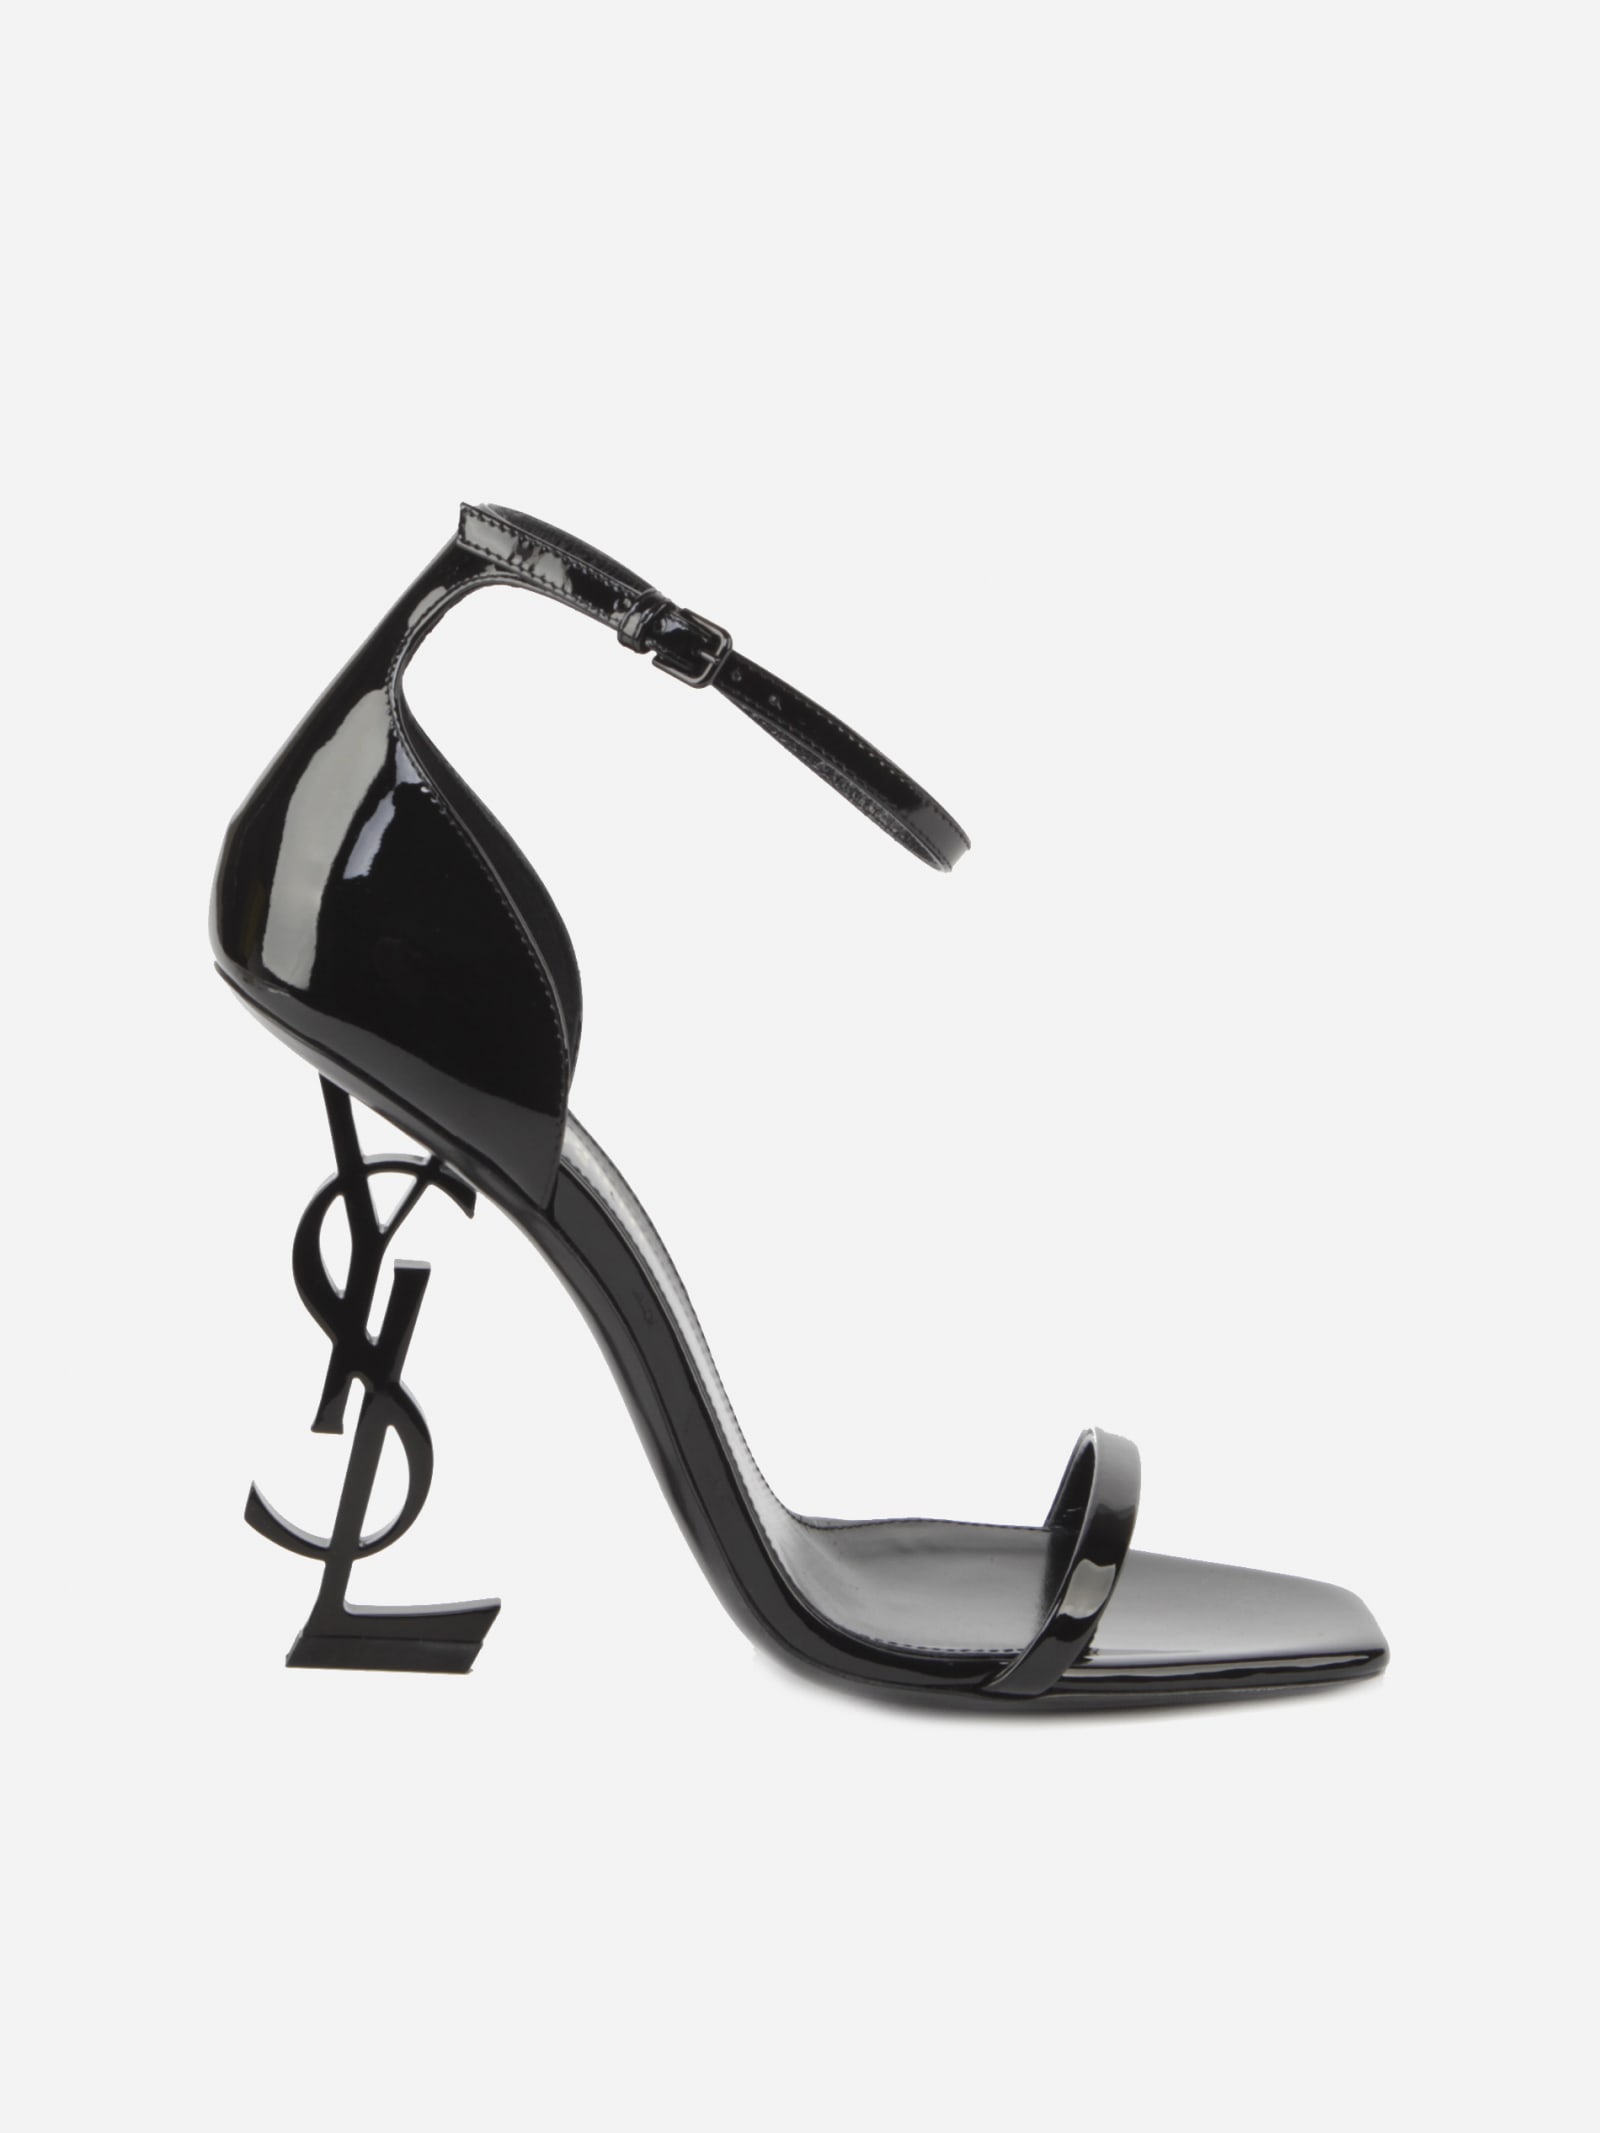 Saint Laurent Opyum Sandals In Black Patent Leather